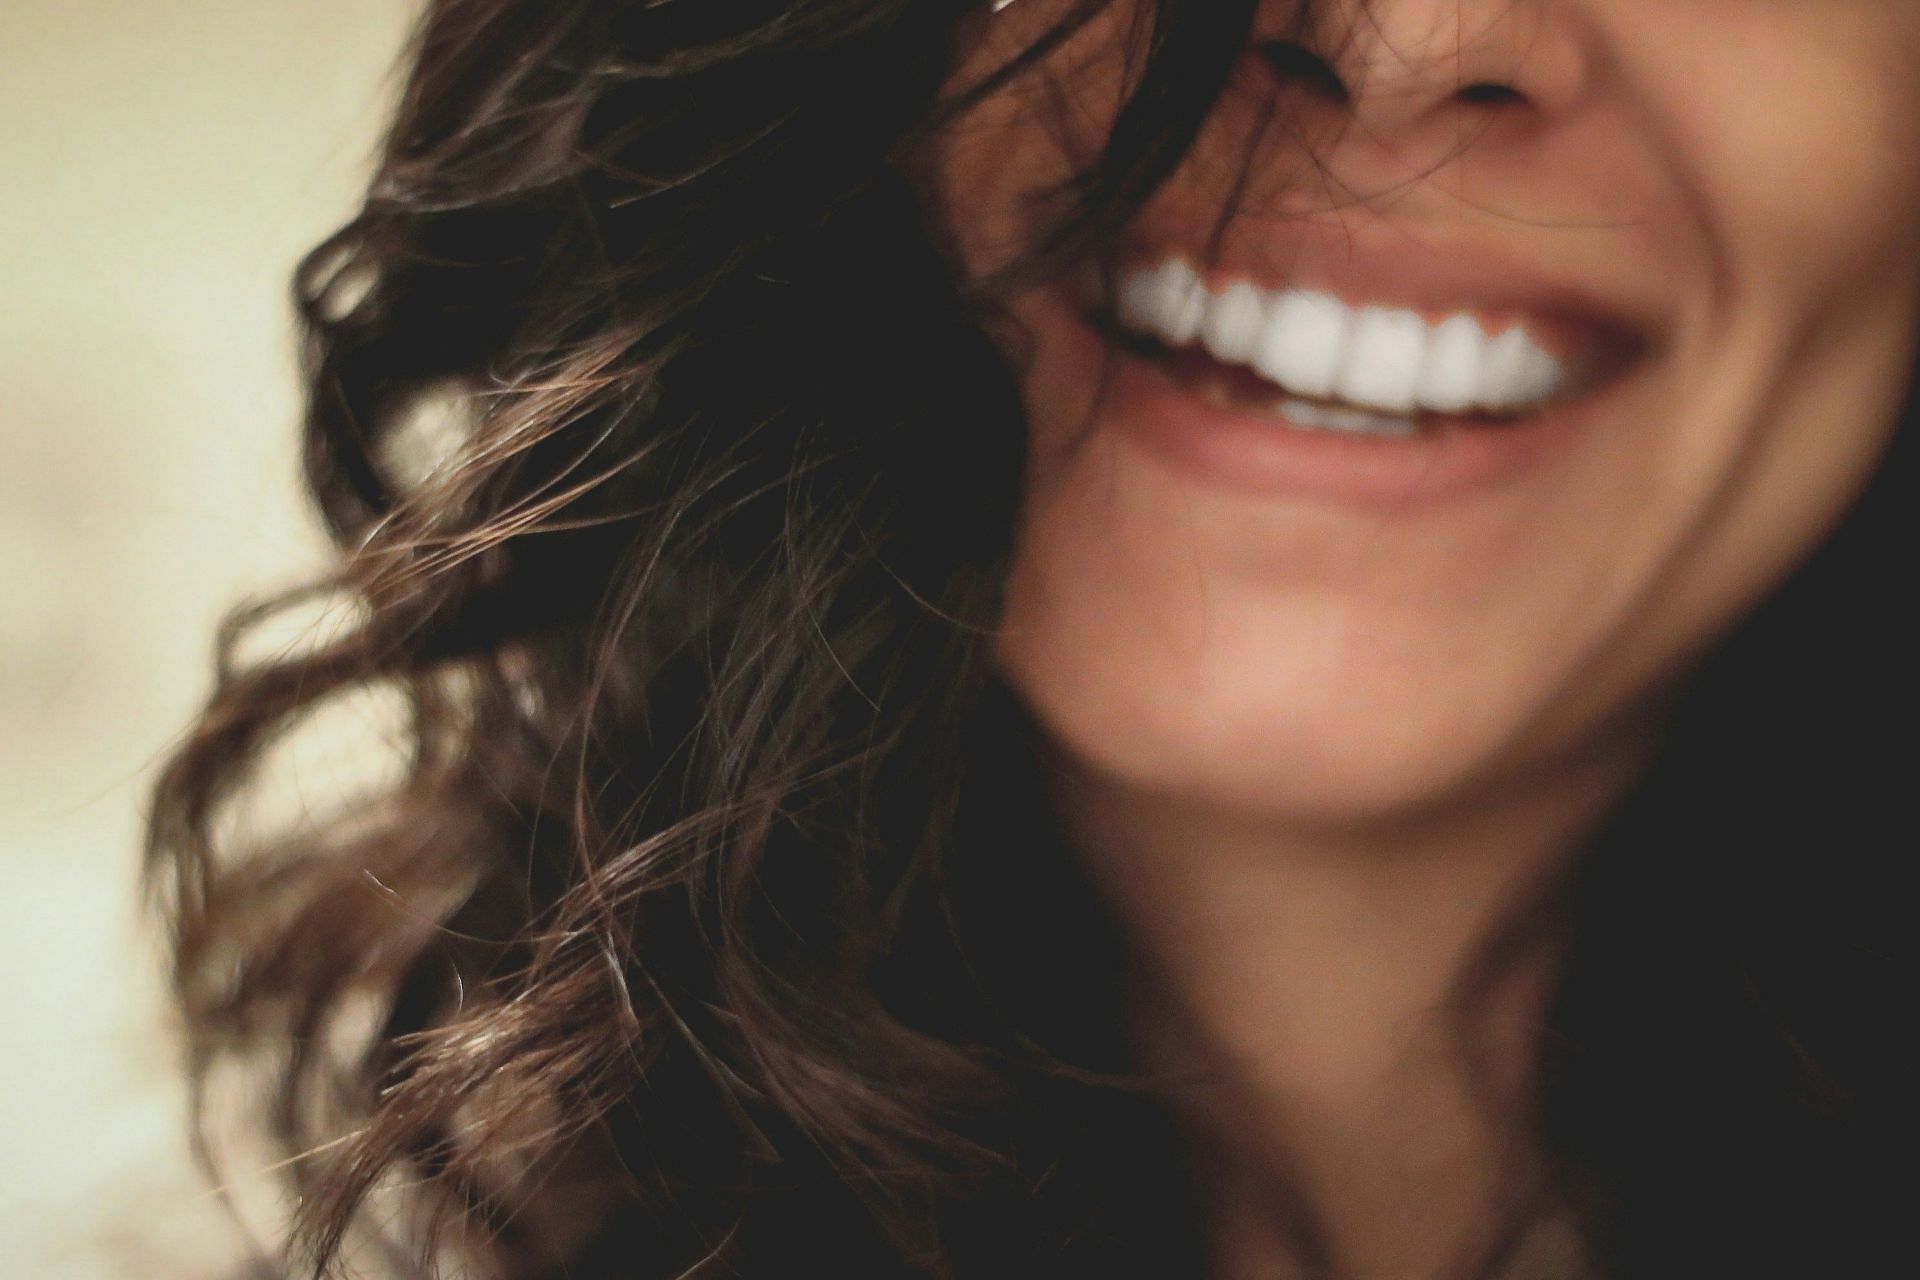 Health benefits of Earl Grey: Better Teeth Health (Image by Lesly Juarez/Unsplash)